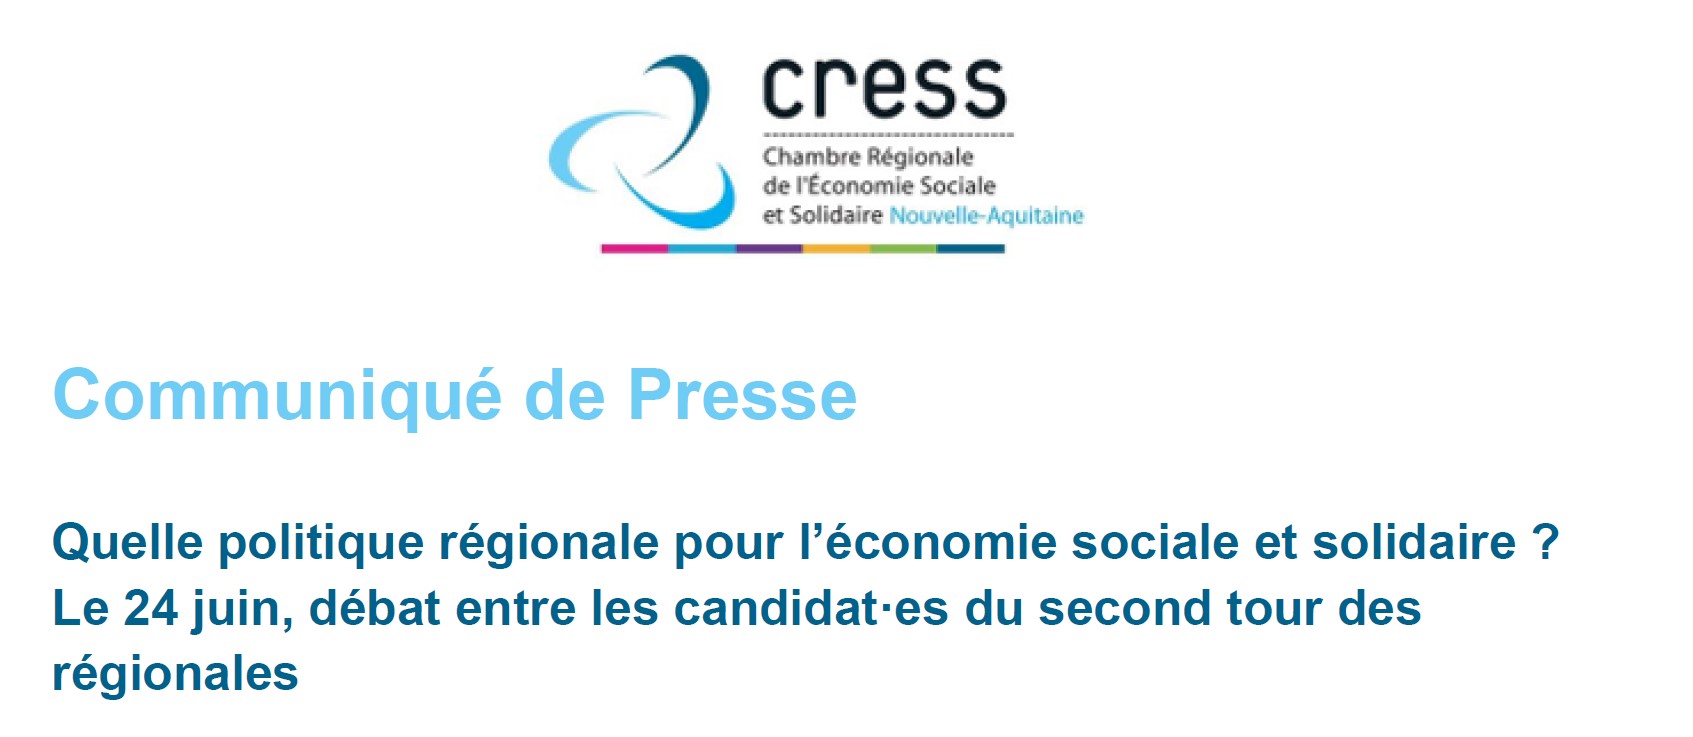 CRESS // relations presse